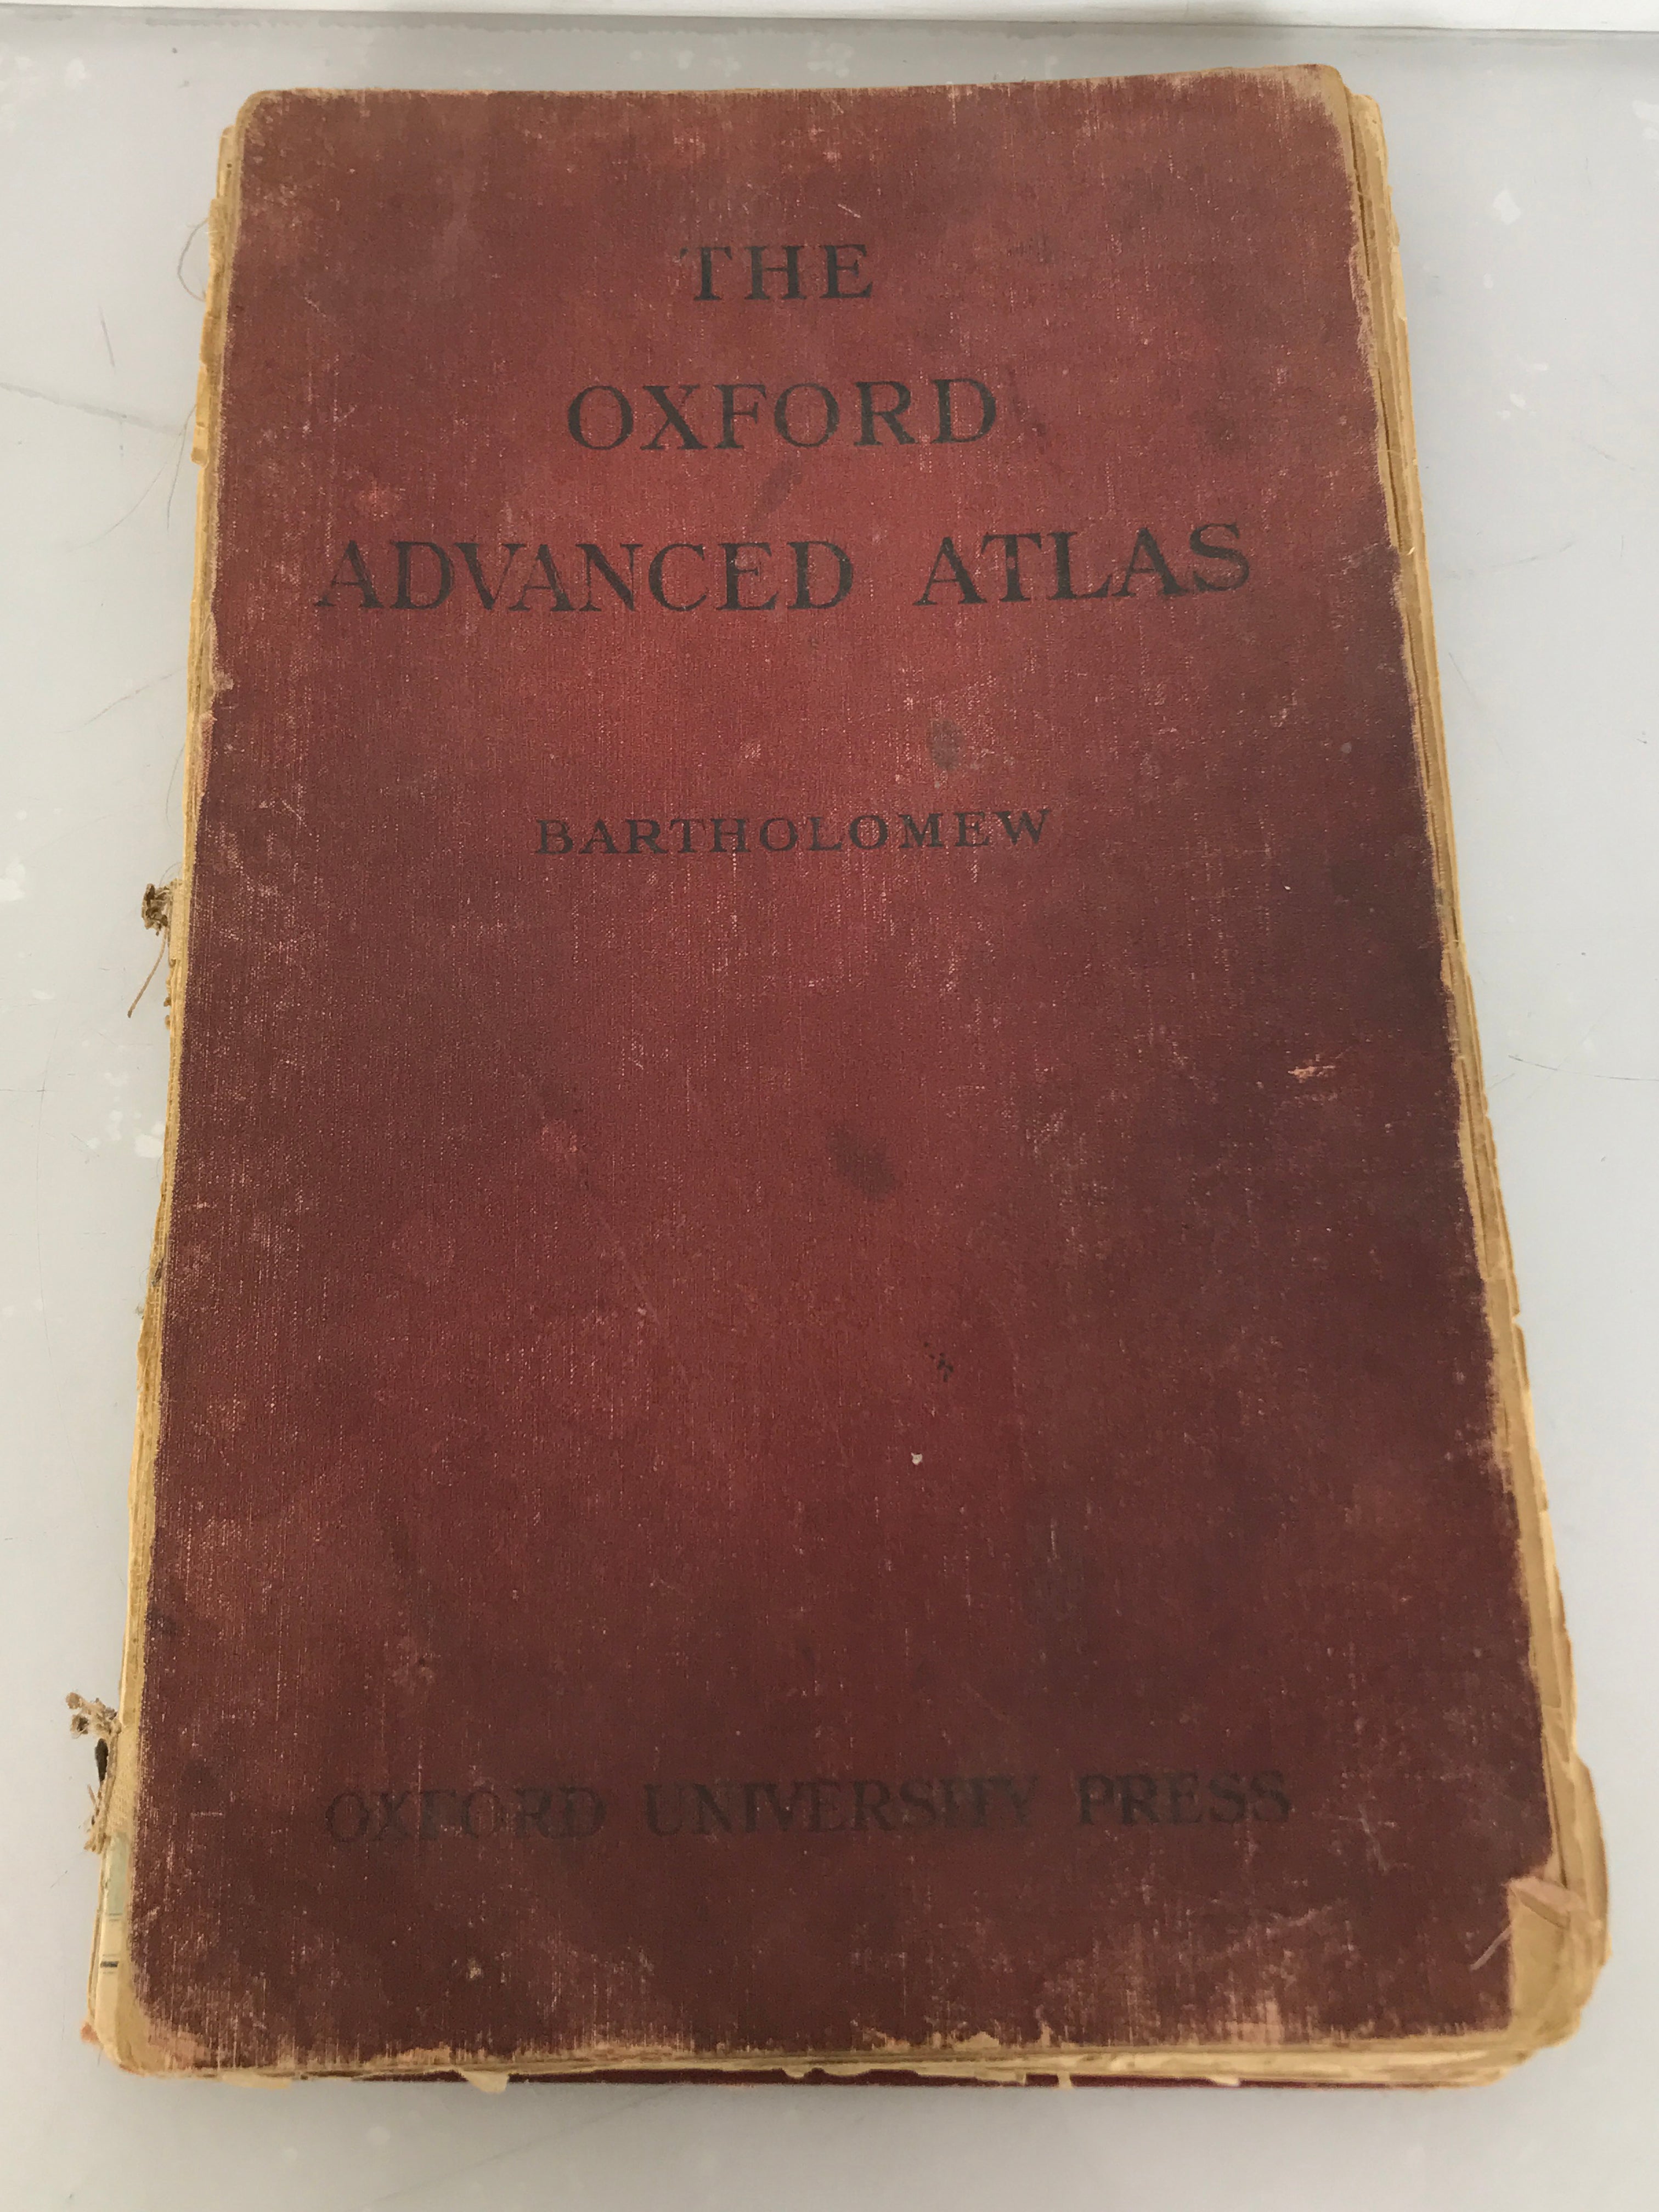 Rare Antique Copy of The Oxford Advanced Atlas by John Bartholomew Second Edition 1924